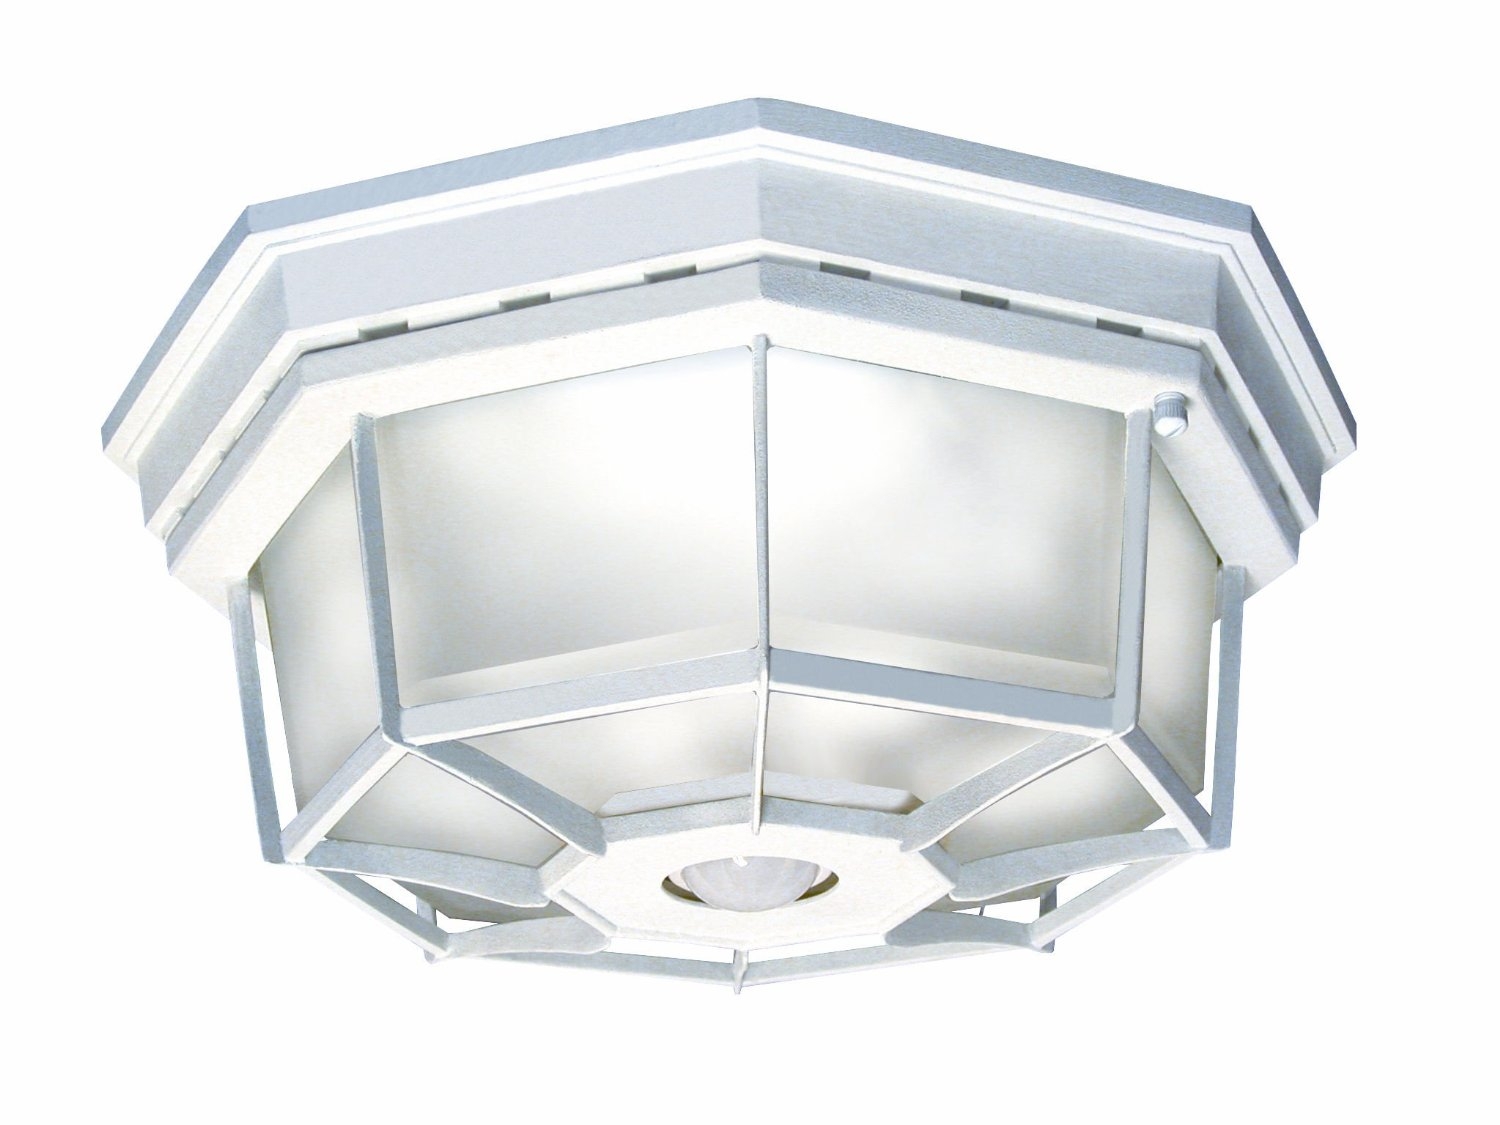 Motion Sensor Outdoor Ceiling Light Fixtureoutdoor ceiling light motion sensor 10 advices installing